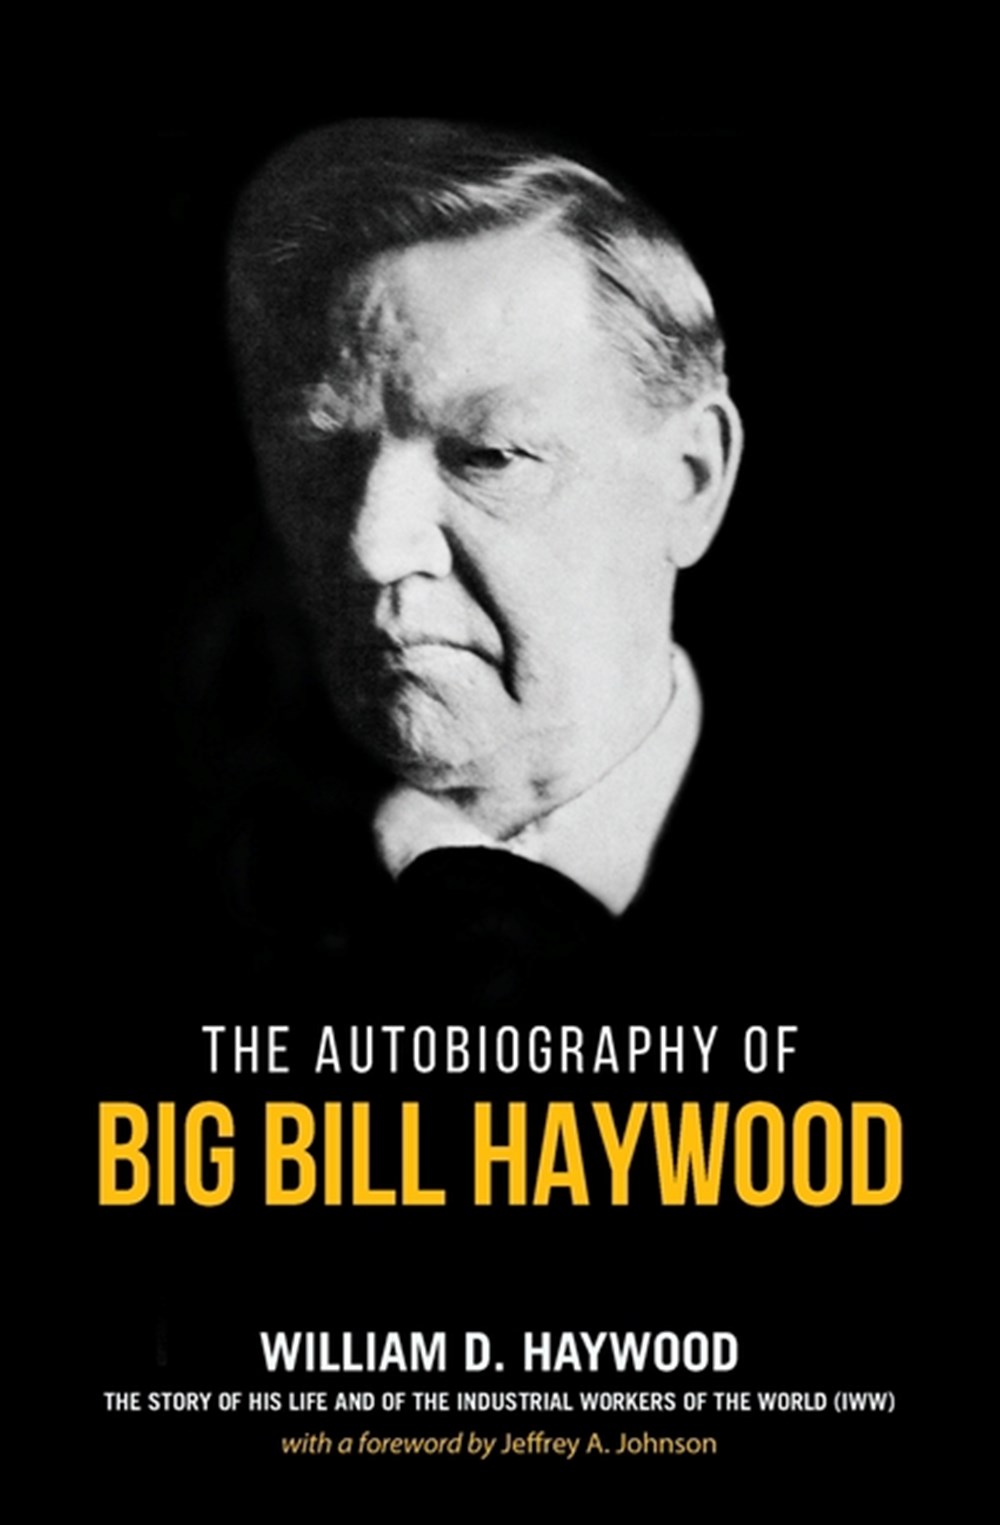 Big Bill Haywood's Book: The Autobiography of Big Bill Haywood (Revised)